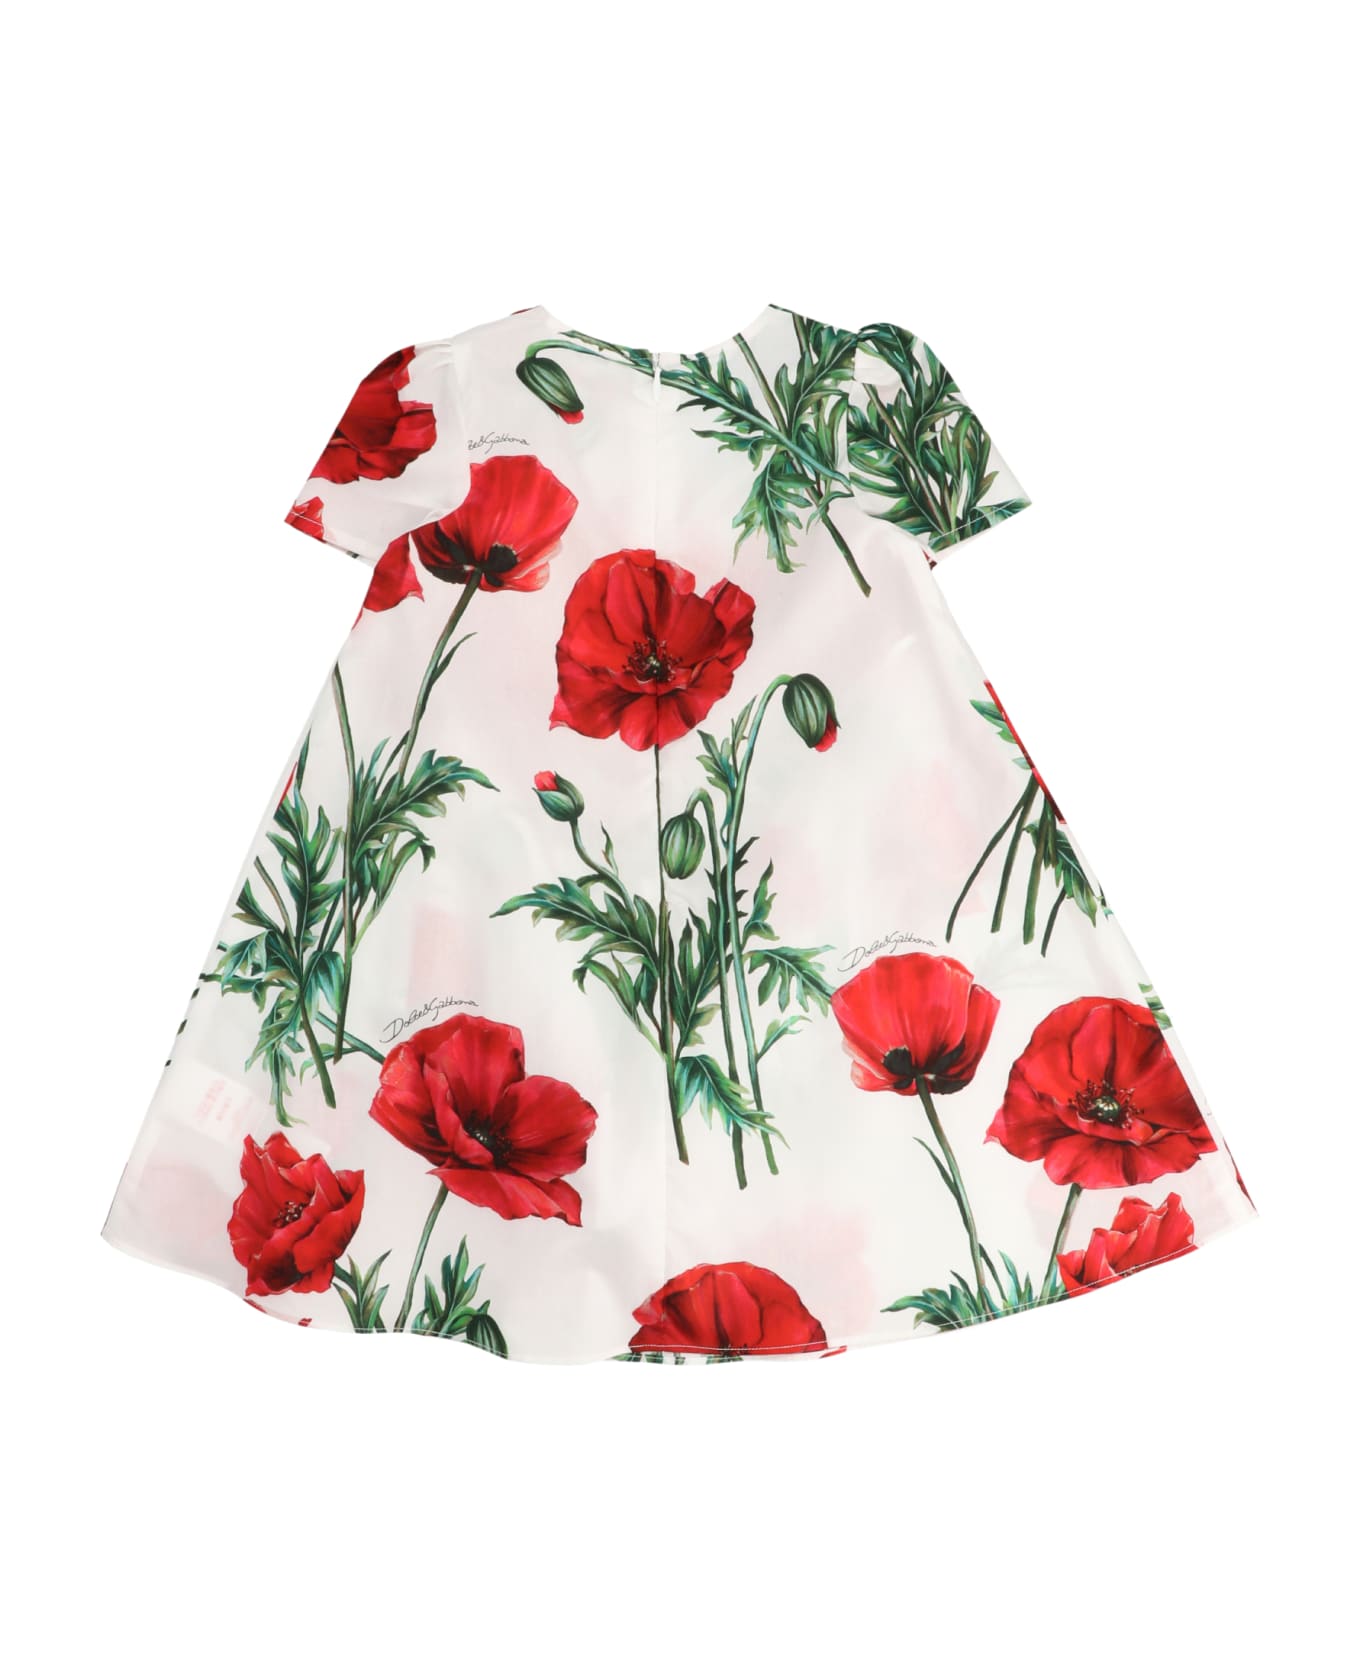 Dolce & Gabbana Floral Printed Dress - Multicolor